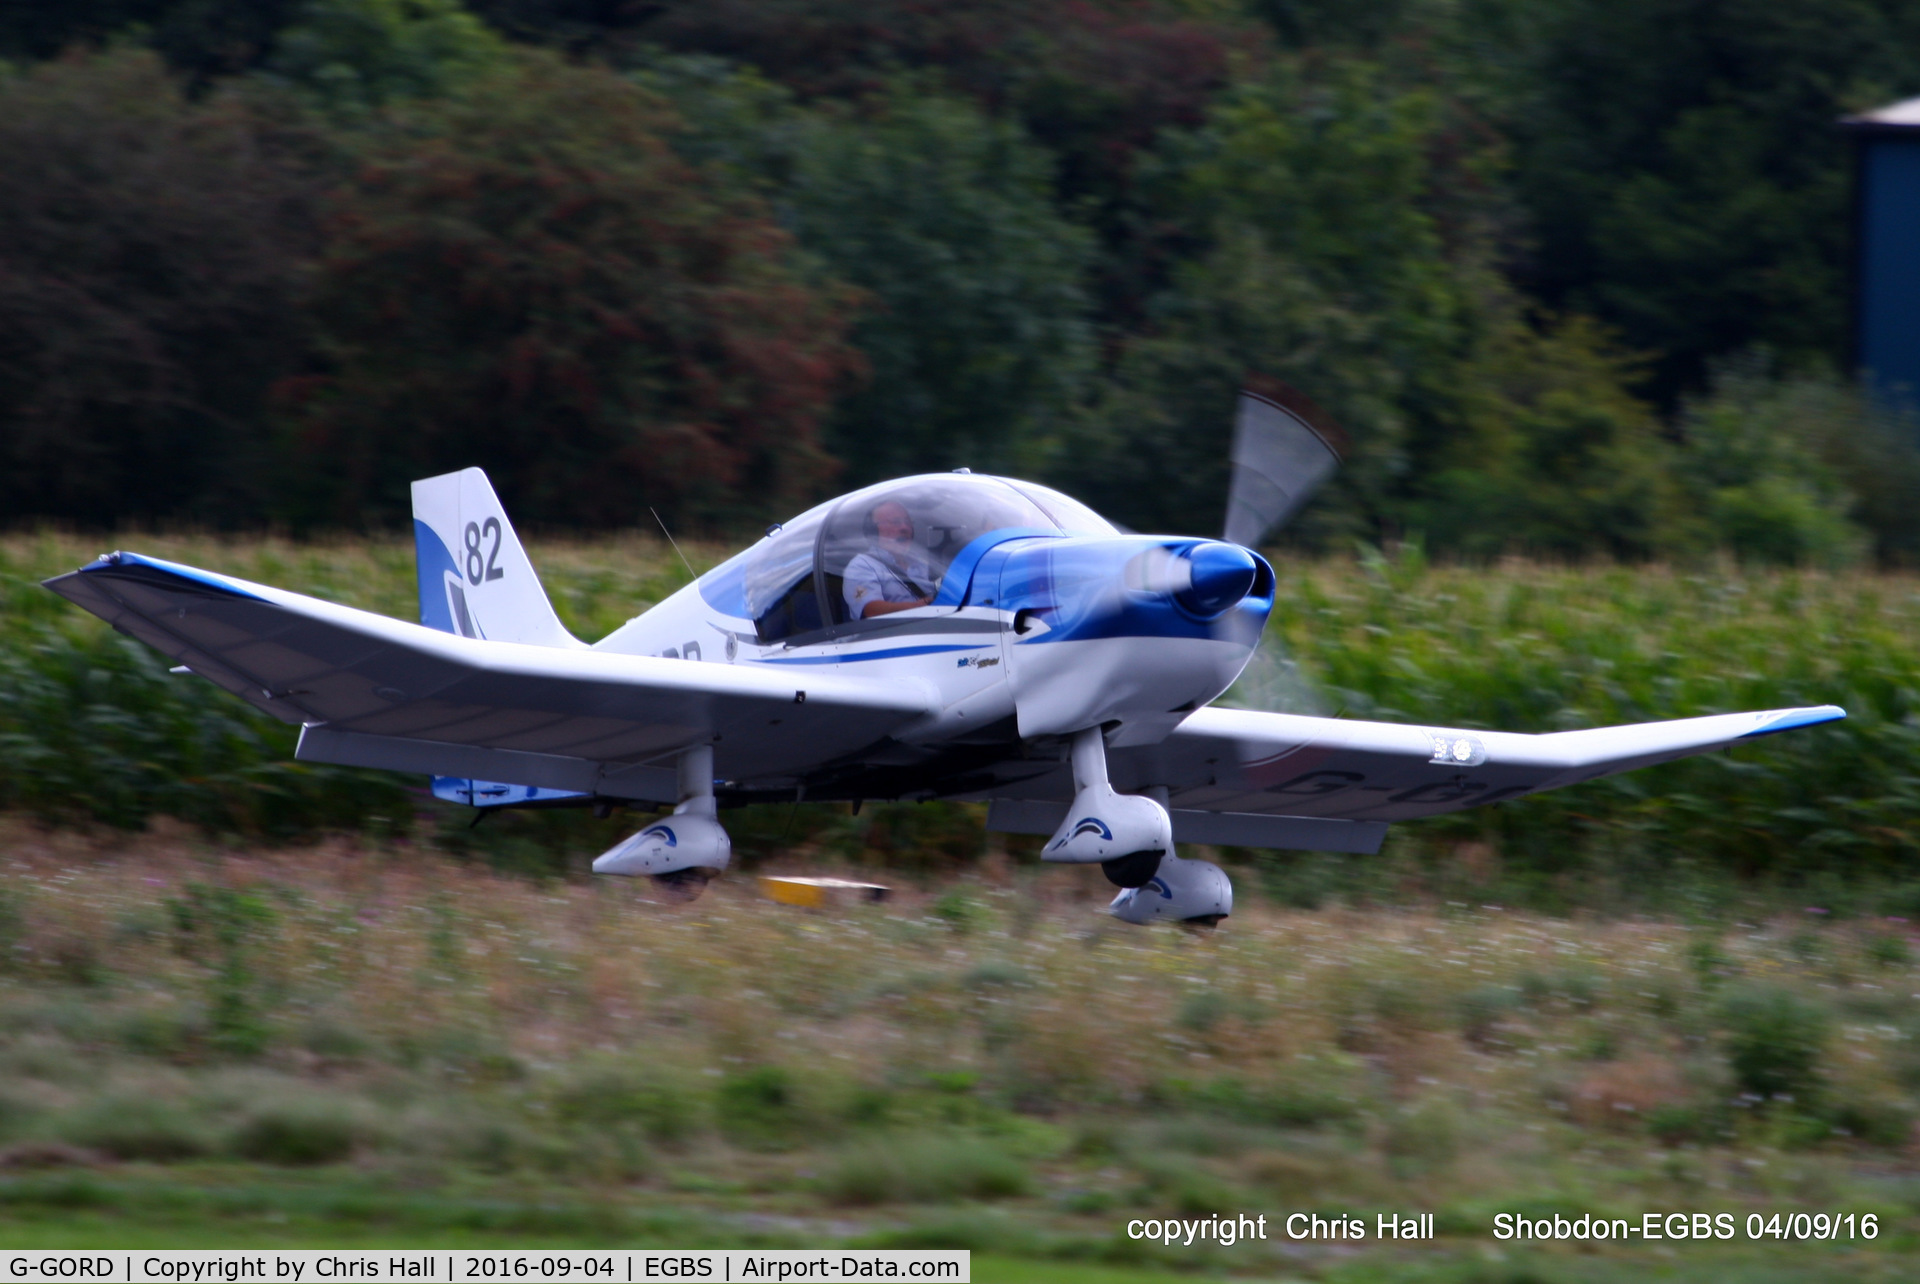 G-GORD, 2014 Robin DR-400-140B Major Major C/N 2669, Royal Aero Club RRRA air race at Shobdon